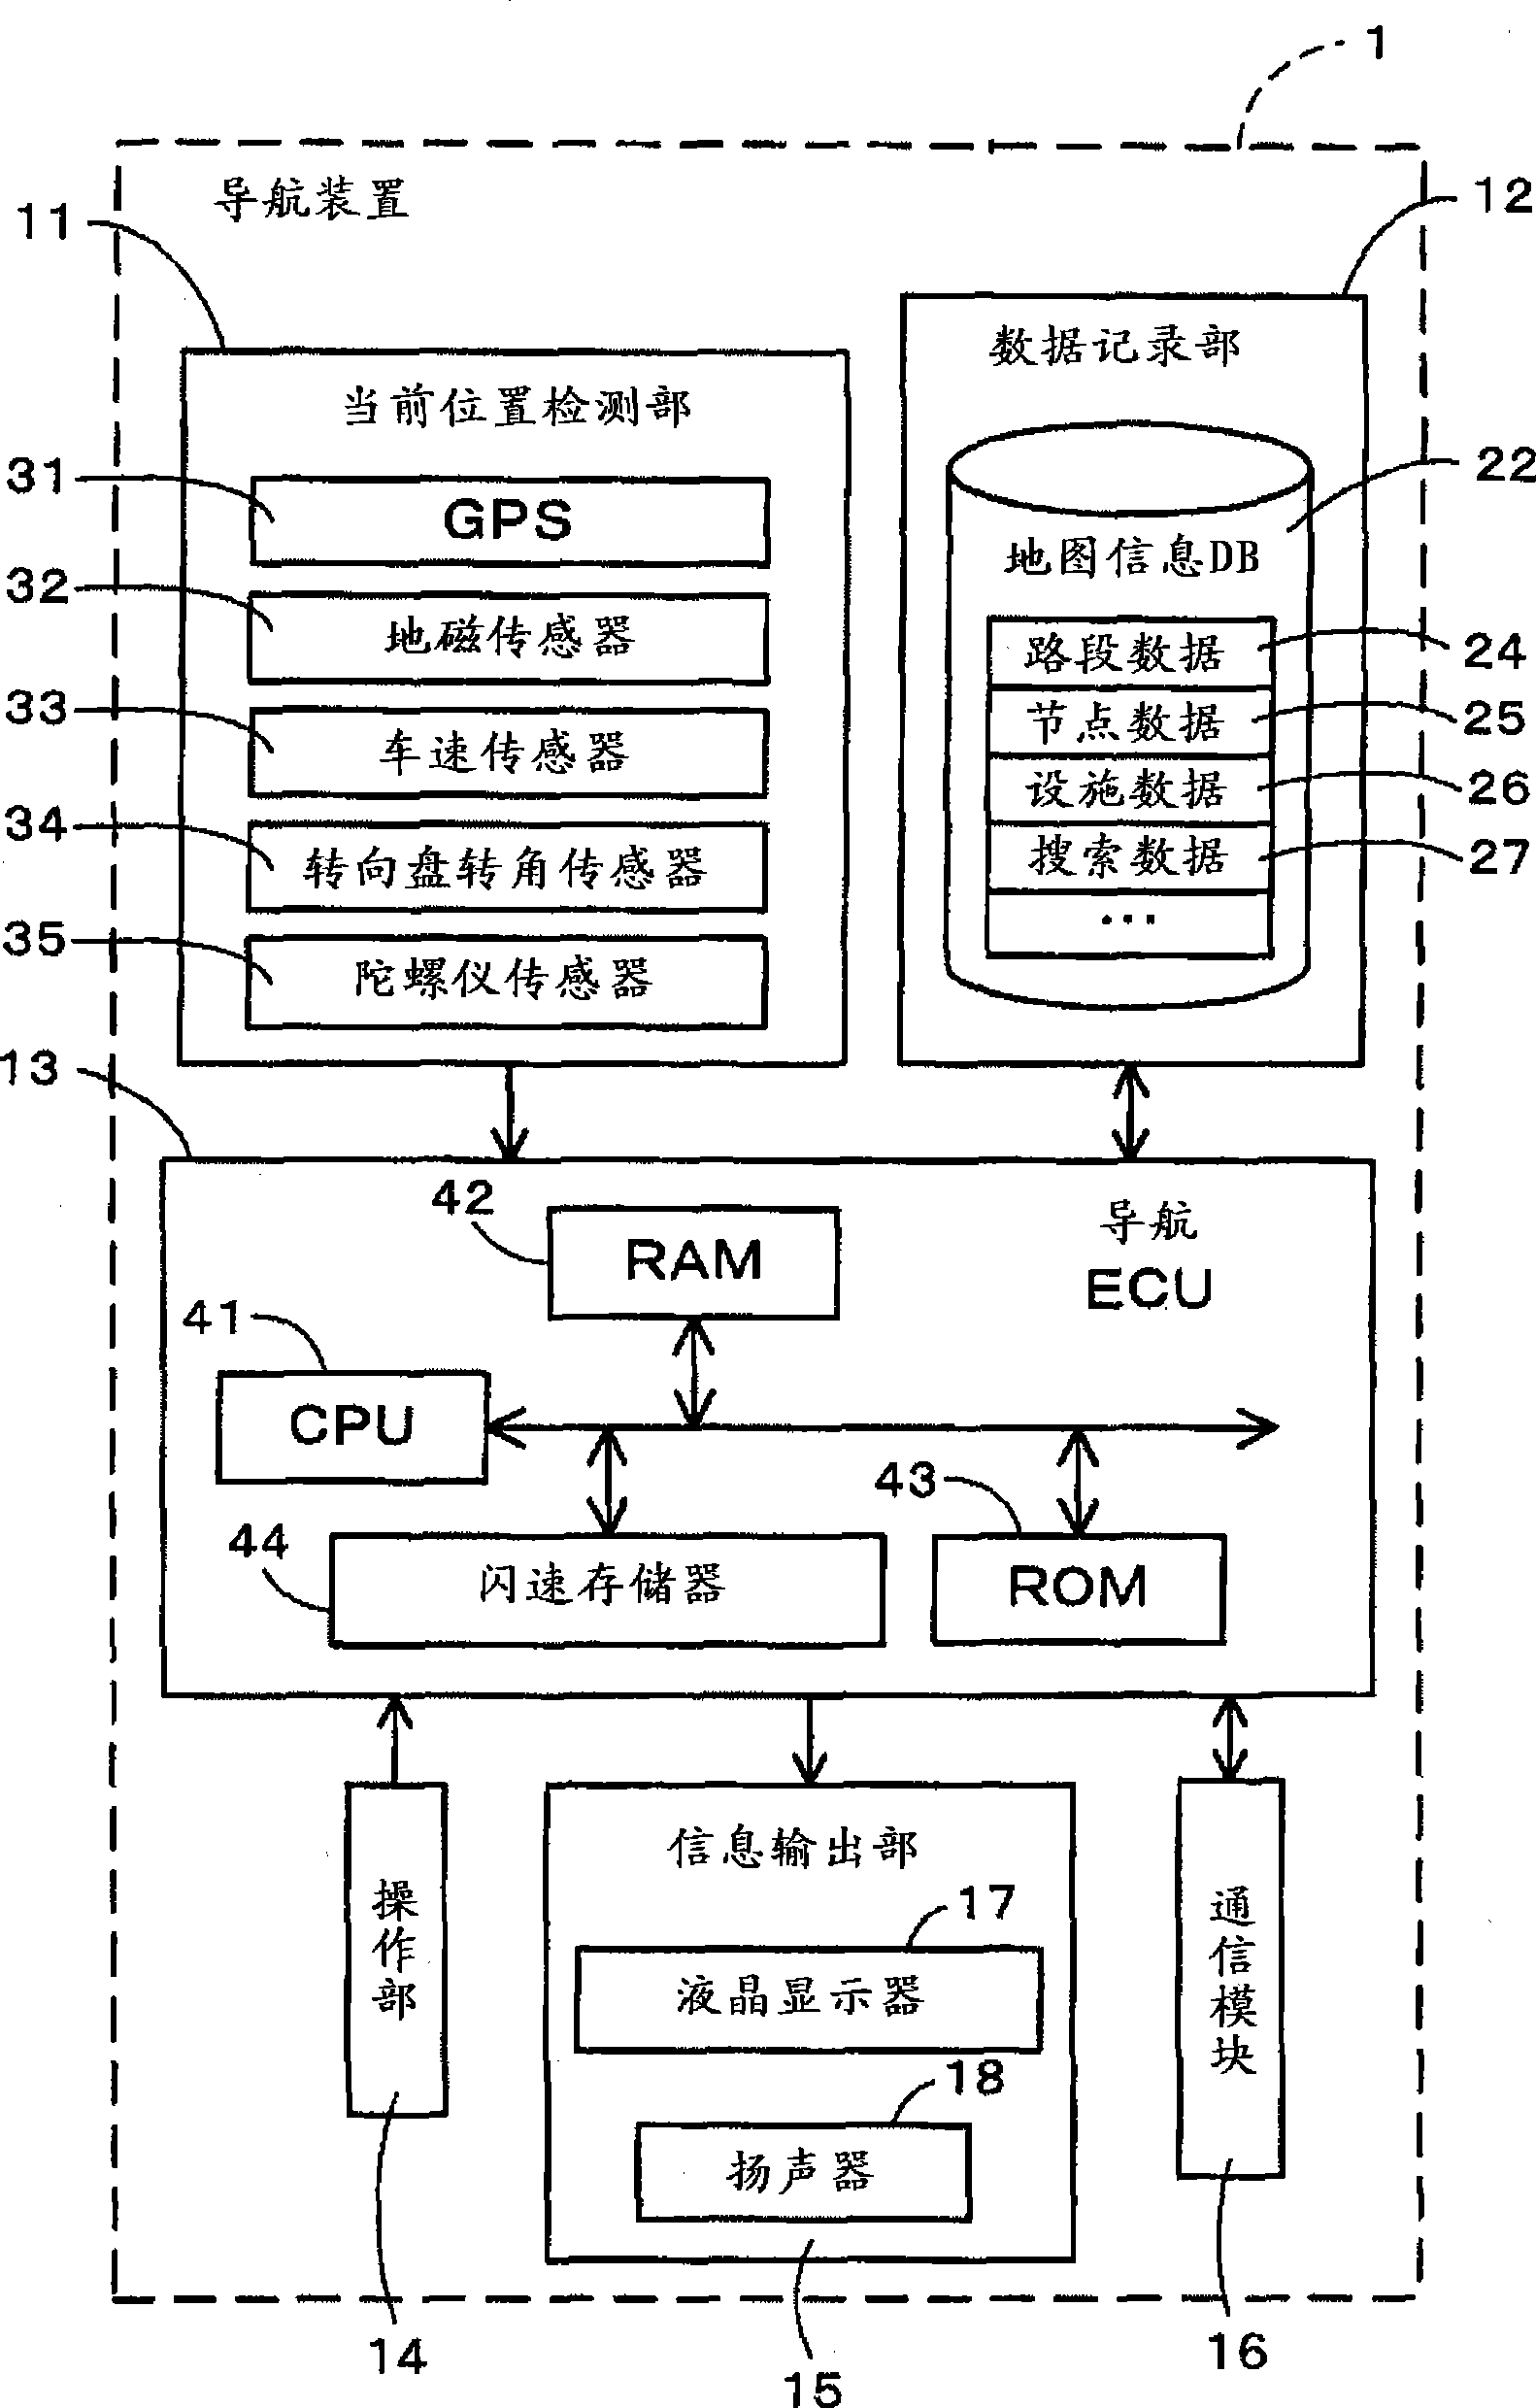 Navigation device and computer program